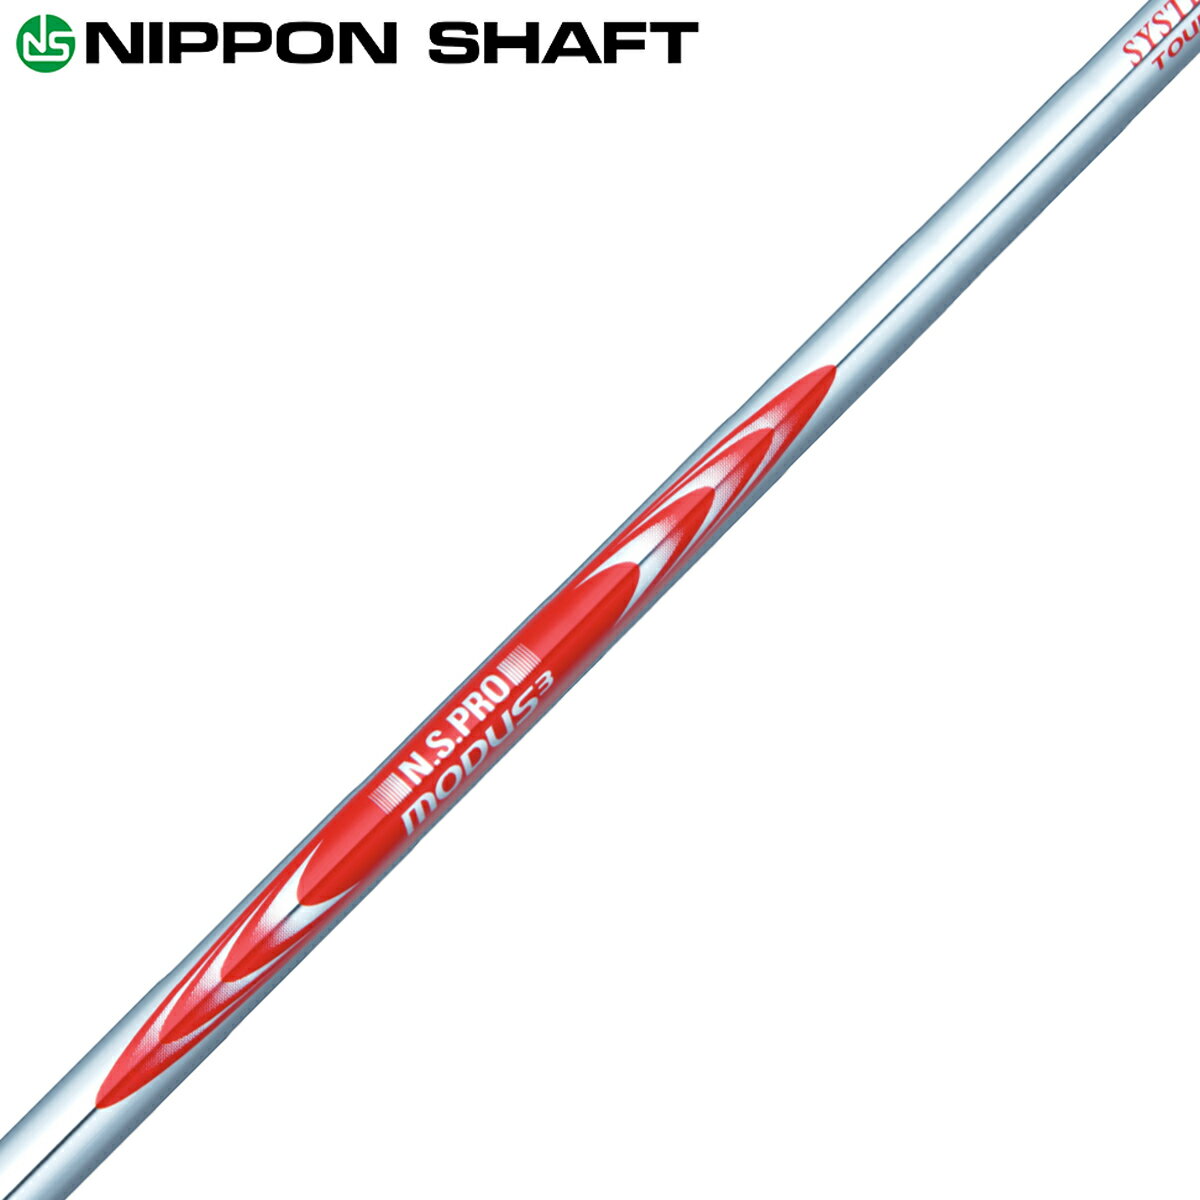 NIPPON SHAFT 日本シャフト日本正規品...の商品画像